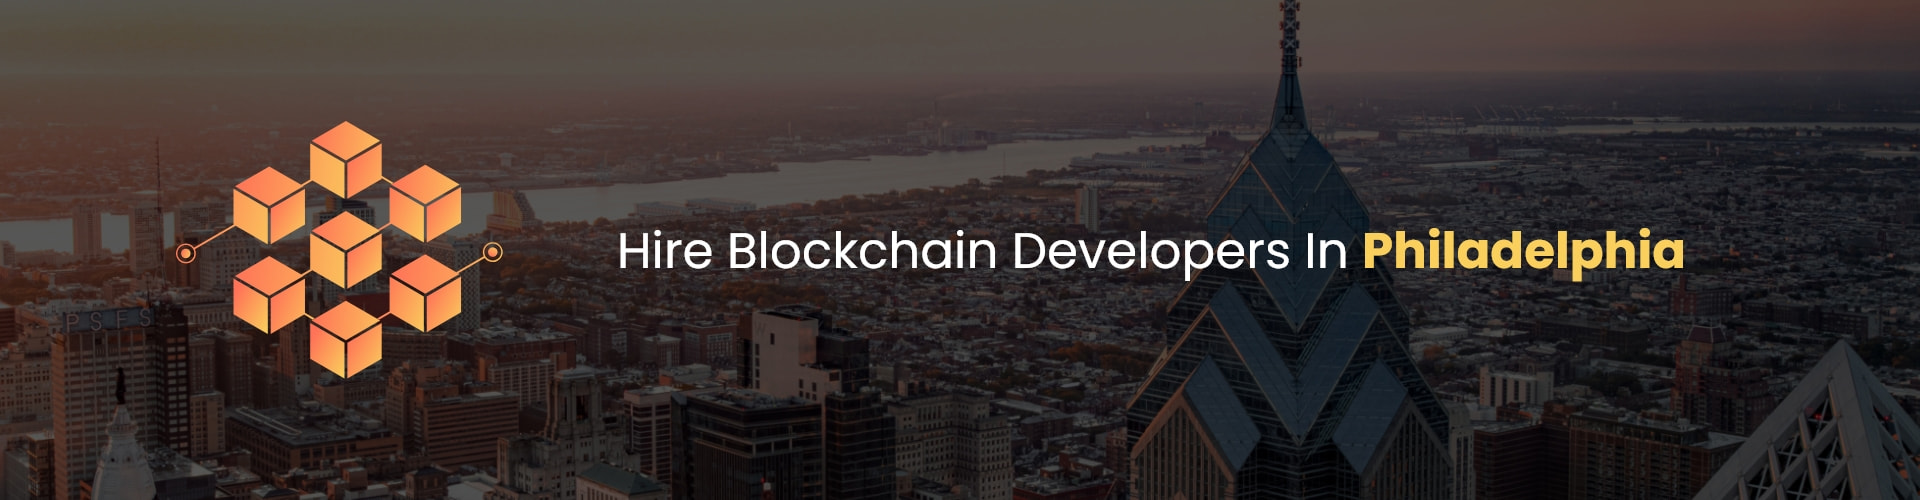 hire blockchain developers in philadelphia